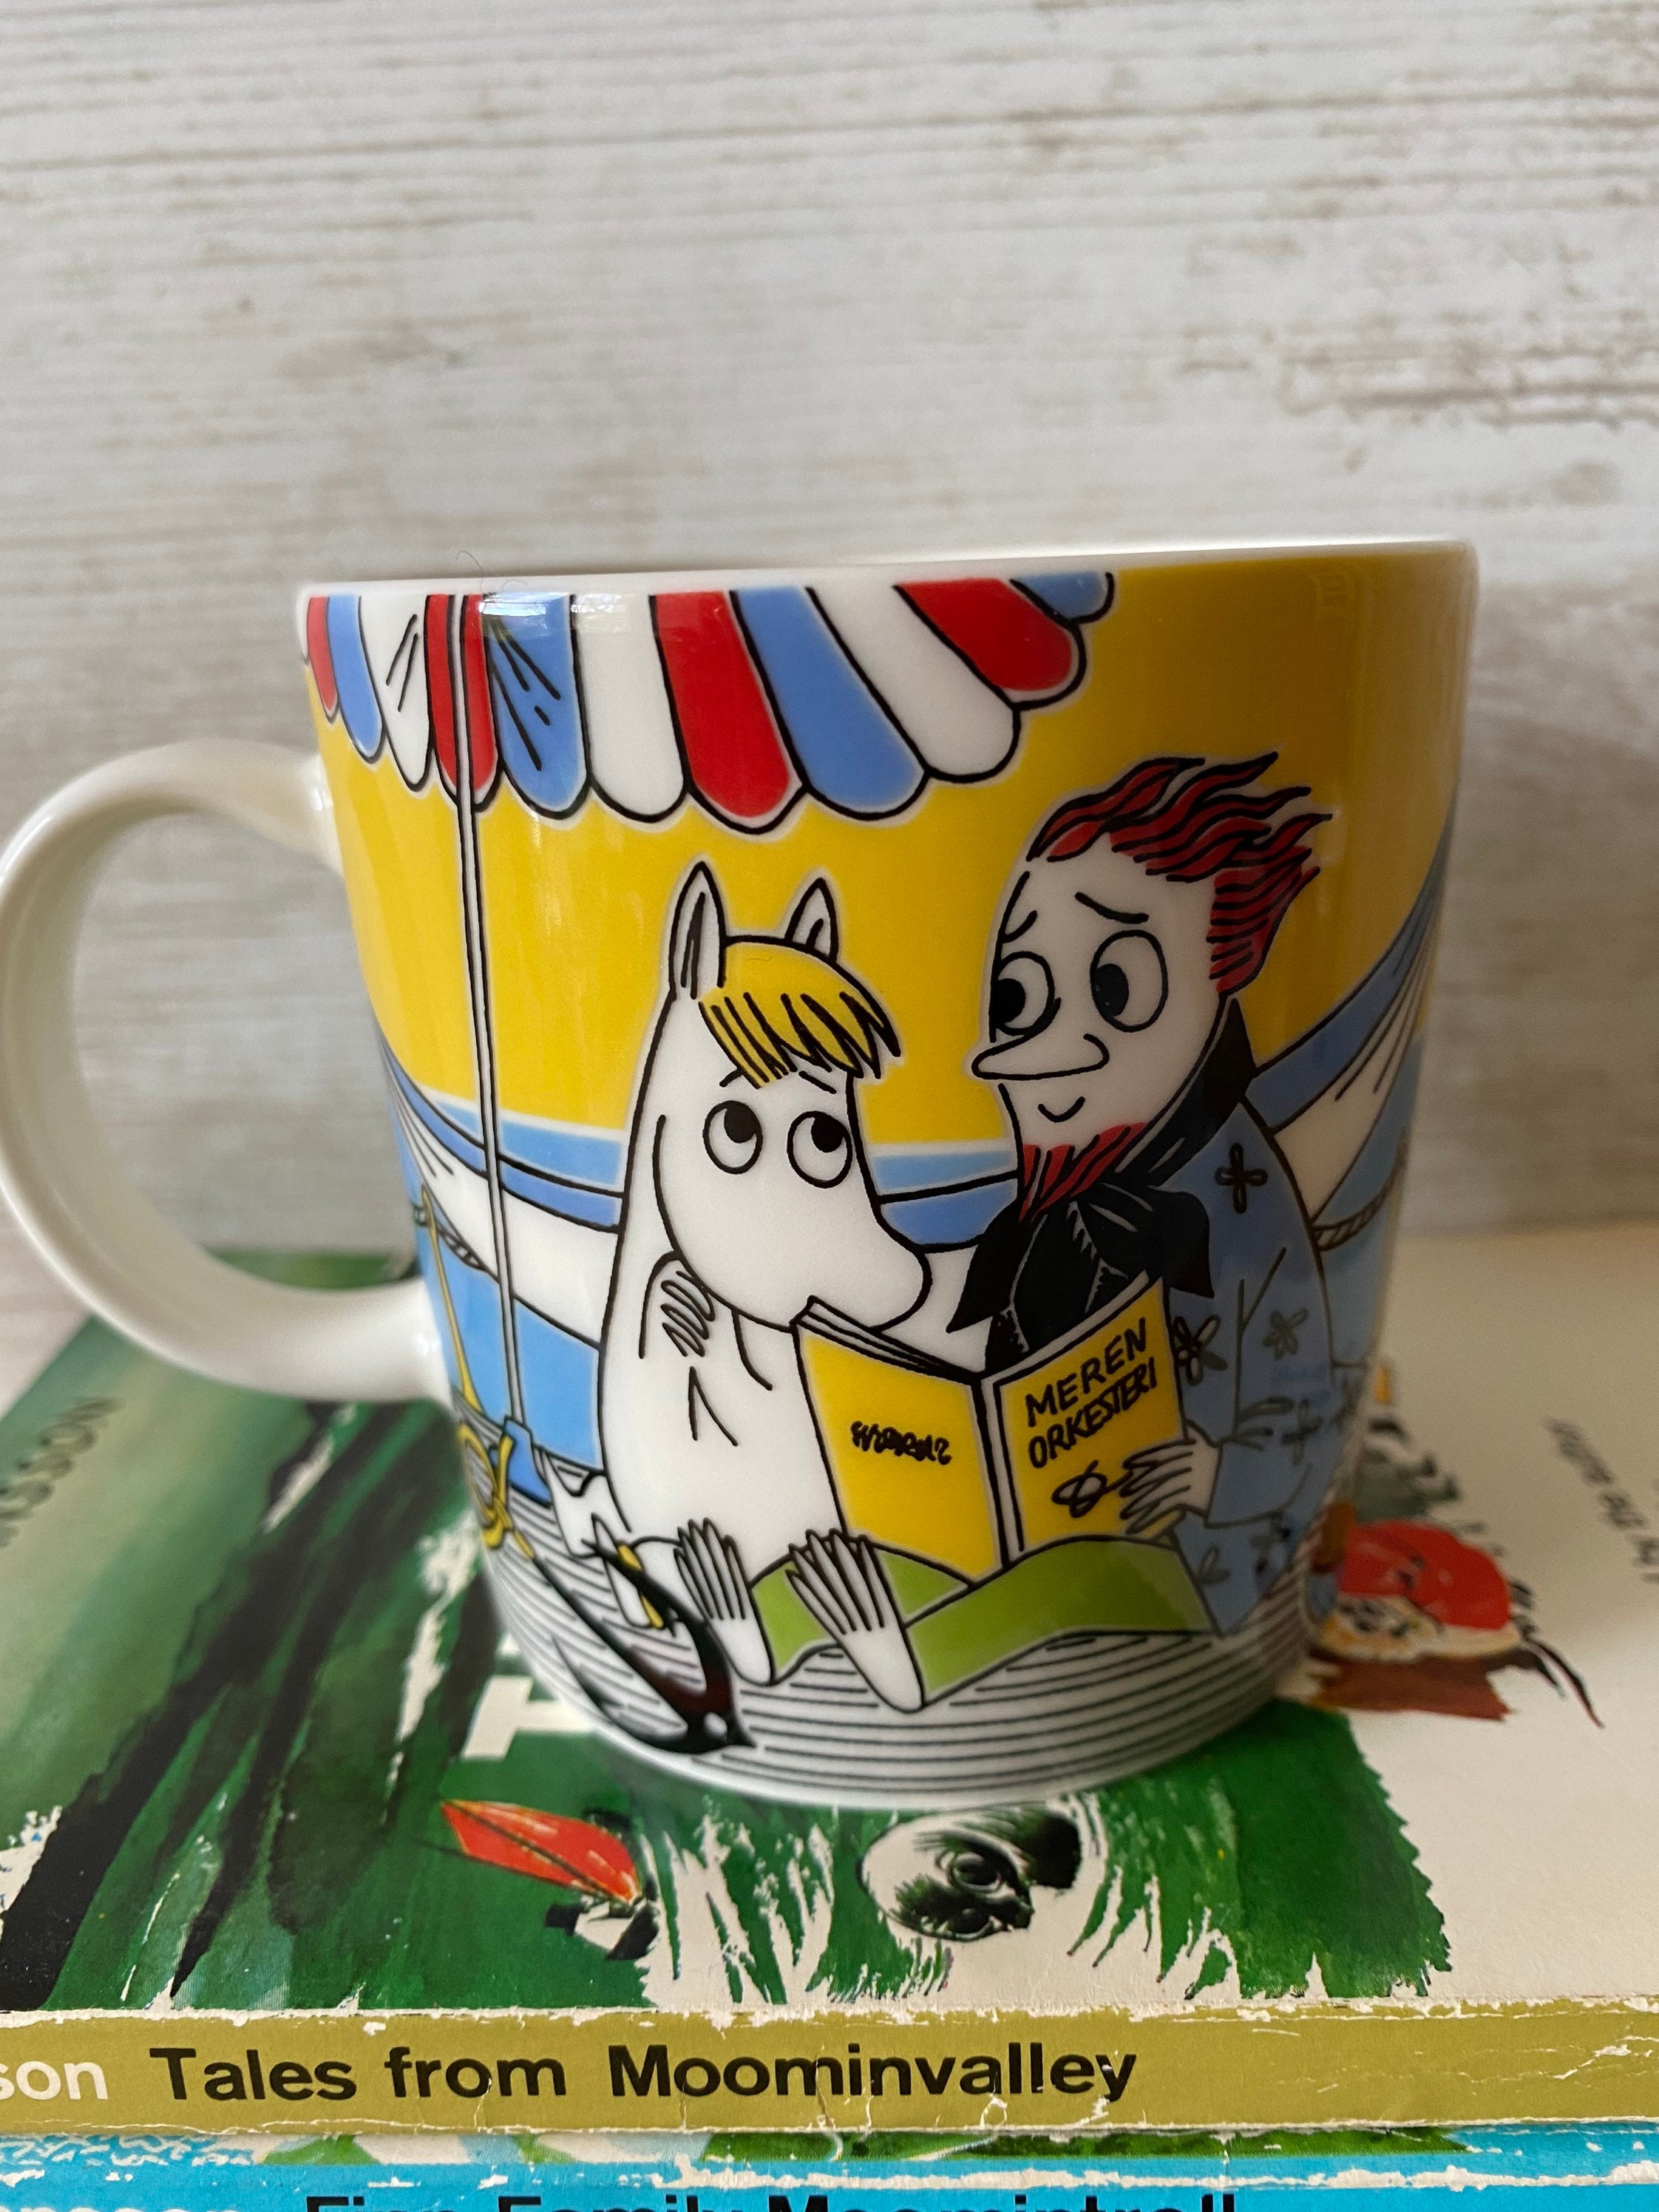 Moomin Mug Par Arabia Finland, Summer Season Mug, Design Is Snorkmaiden & The Poet Inutilisé Moomin 